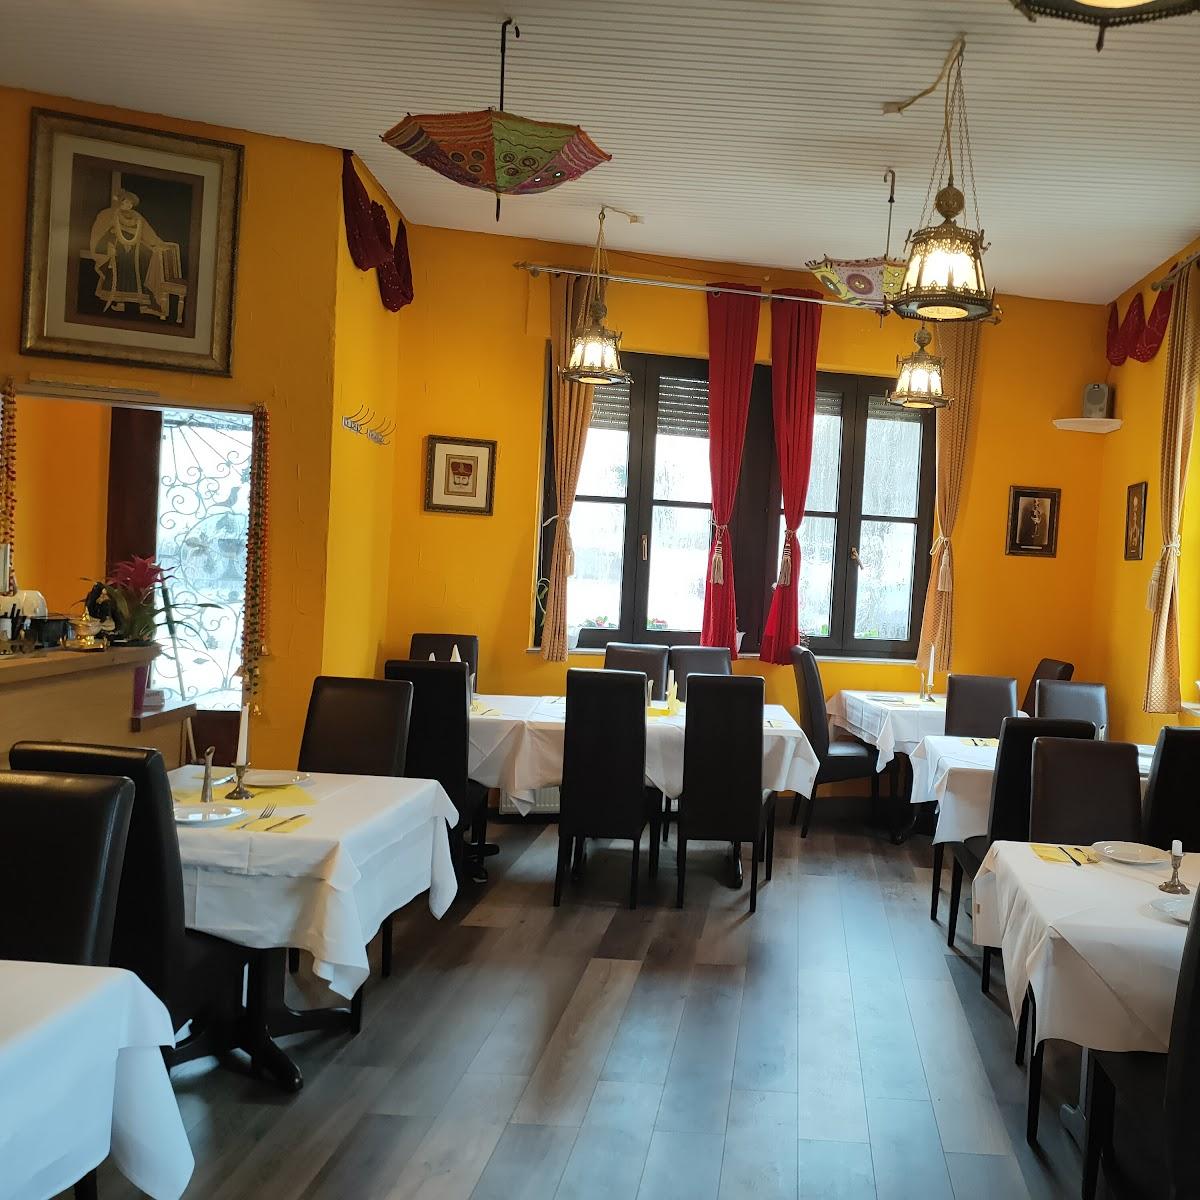 Restaurant "Taste of India" in Goldbach